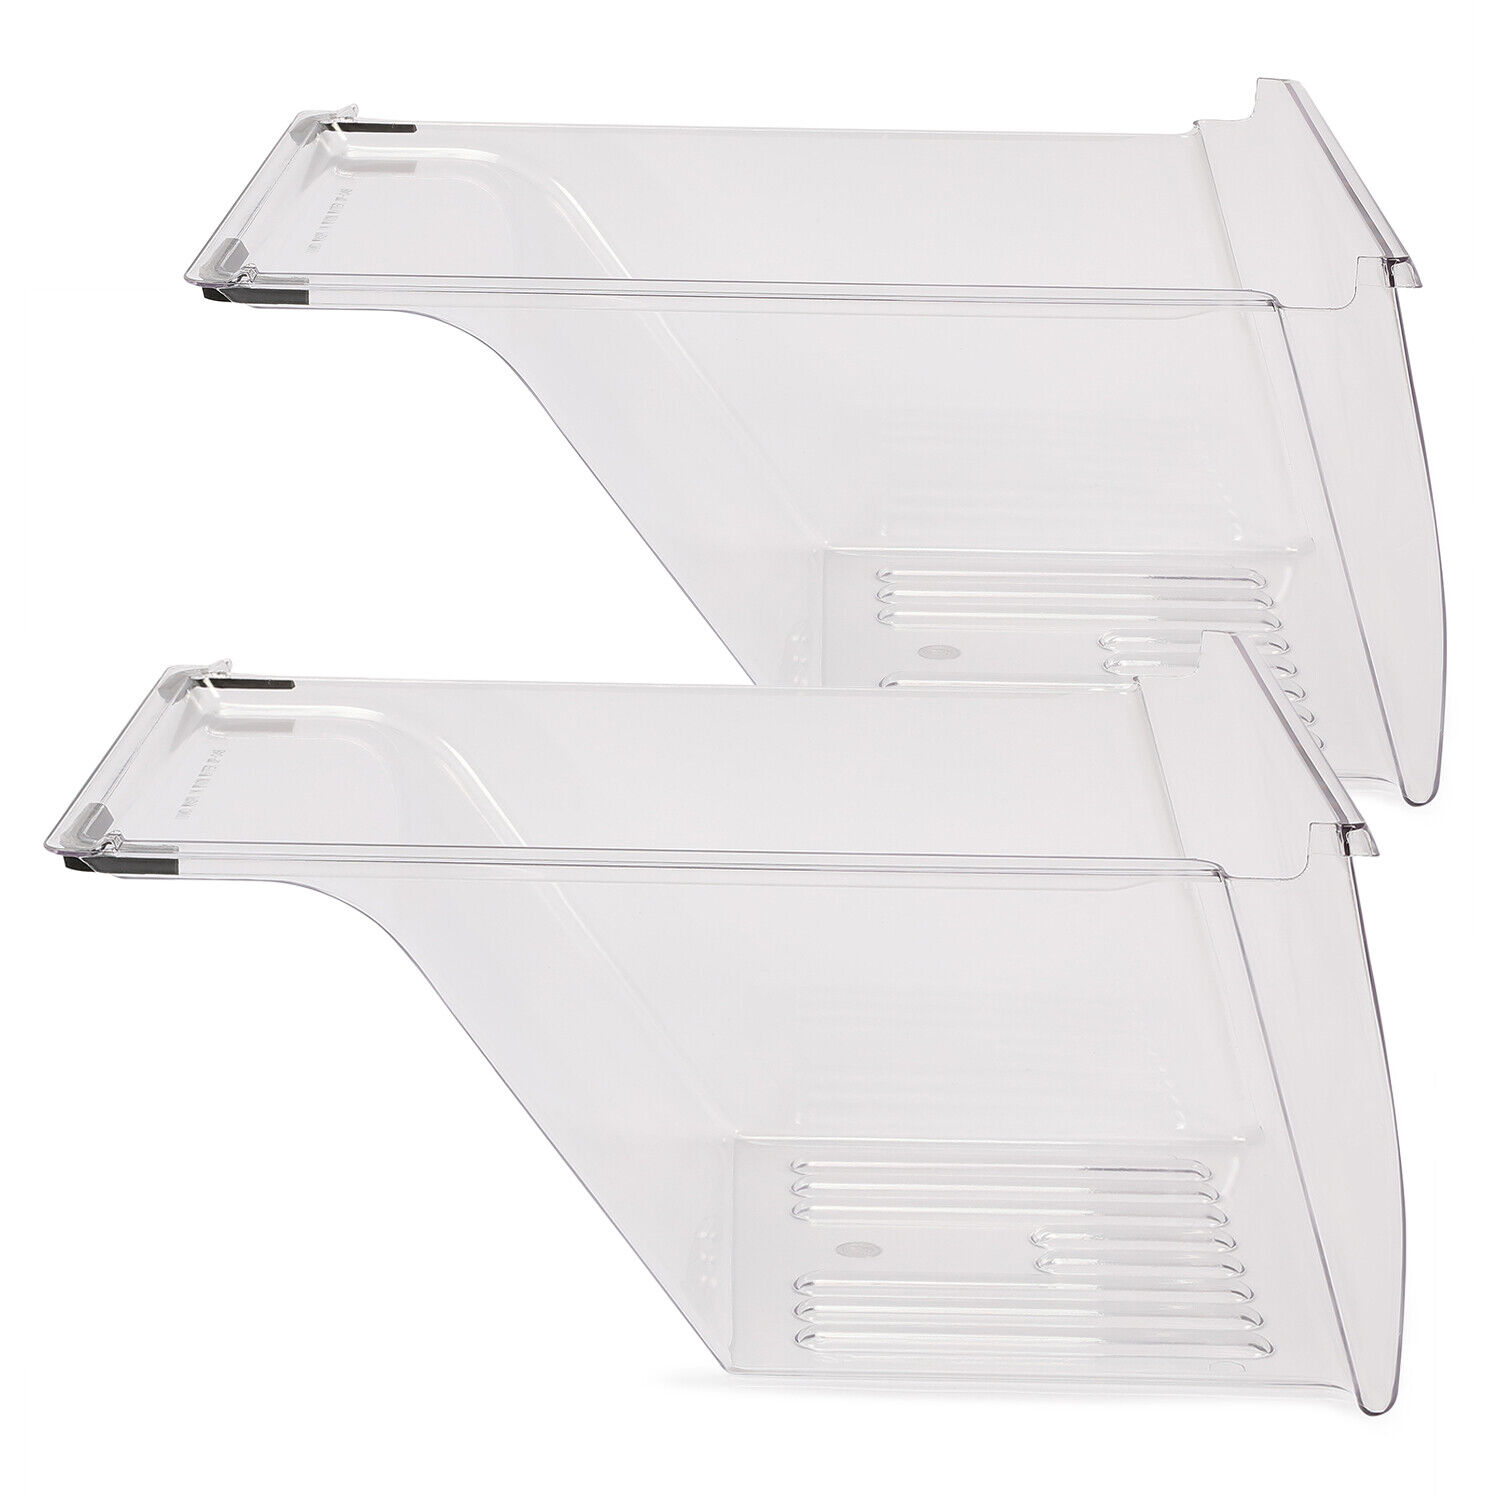 2 x Crisper Drawer Compatible with Frigidaire Refrigerator 240337103 240337107